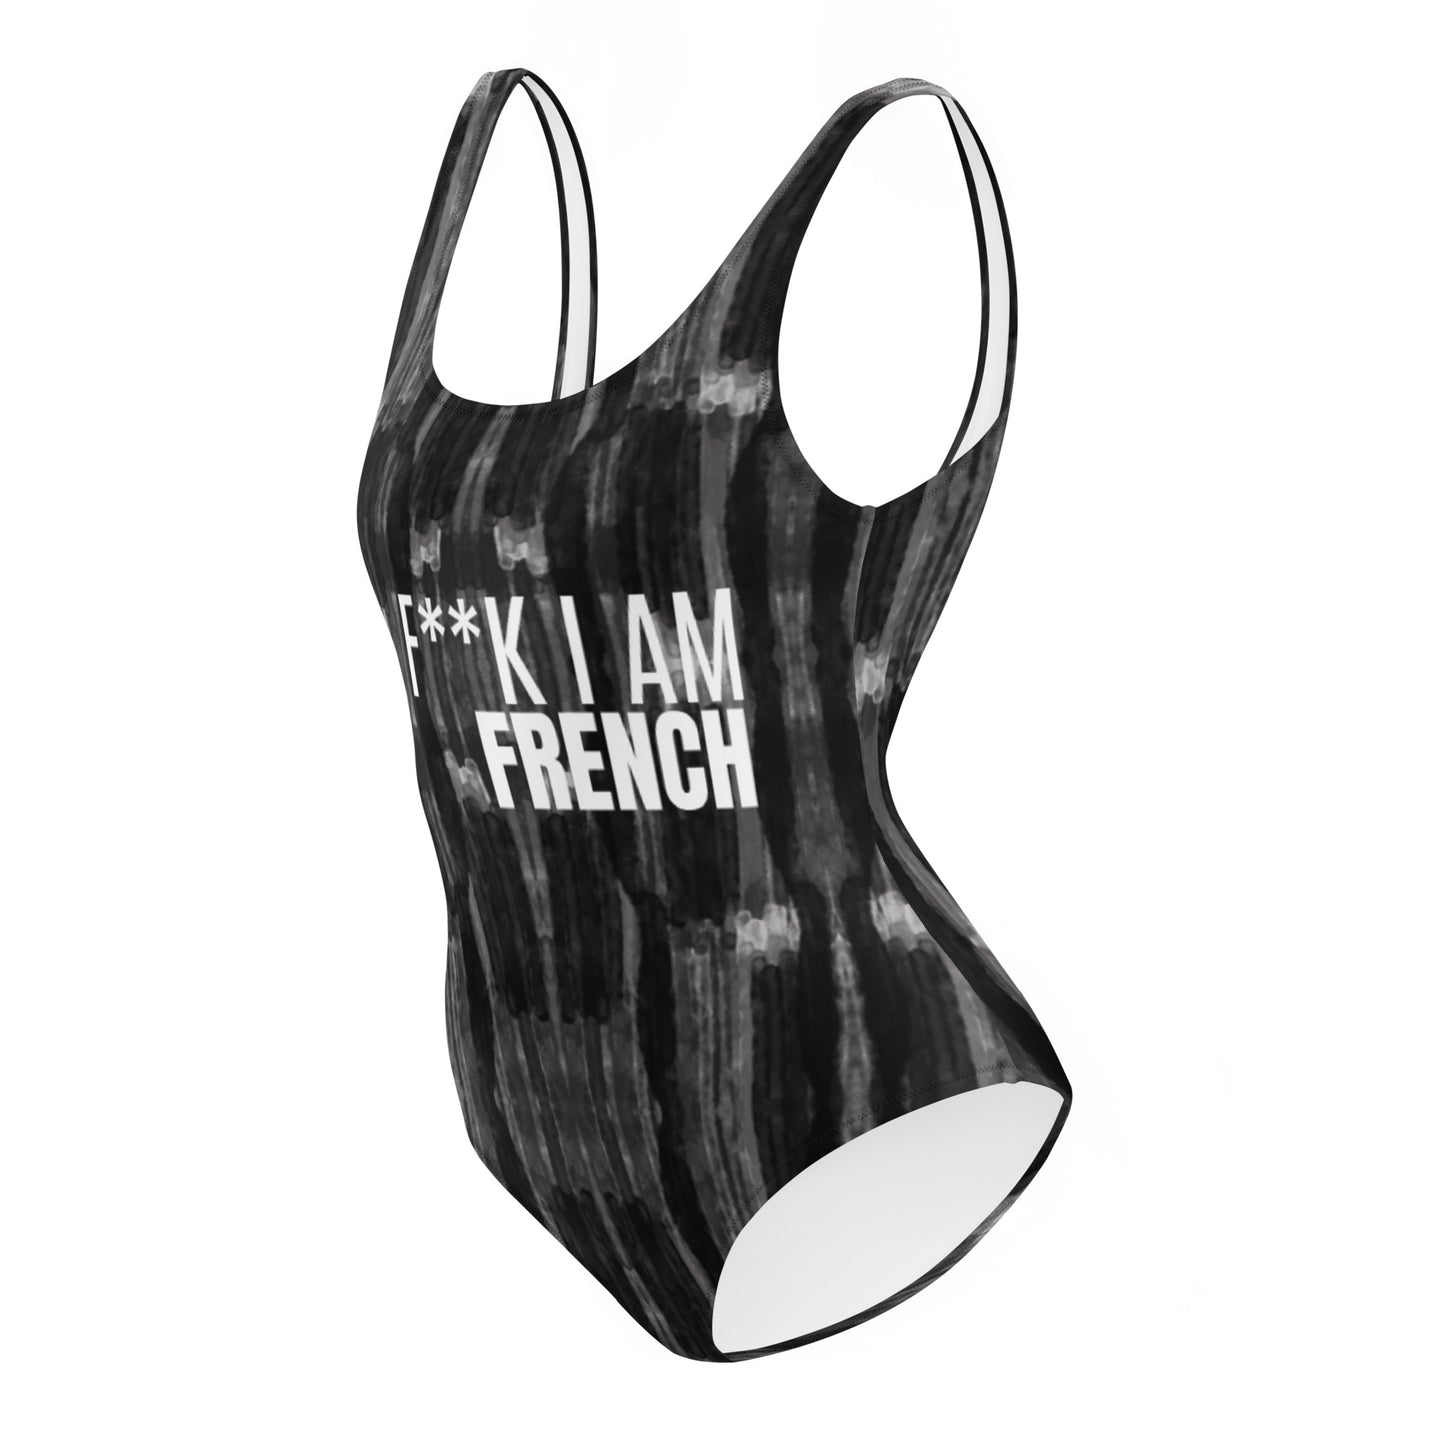 F**k I AM FRENCH - One Piece Swimsuit